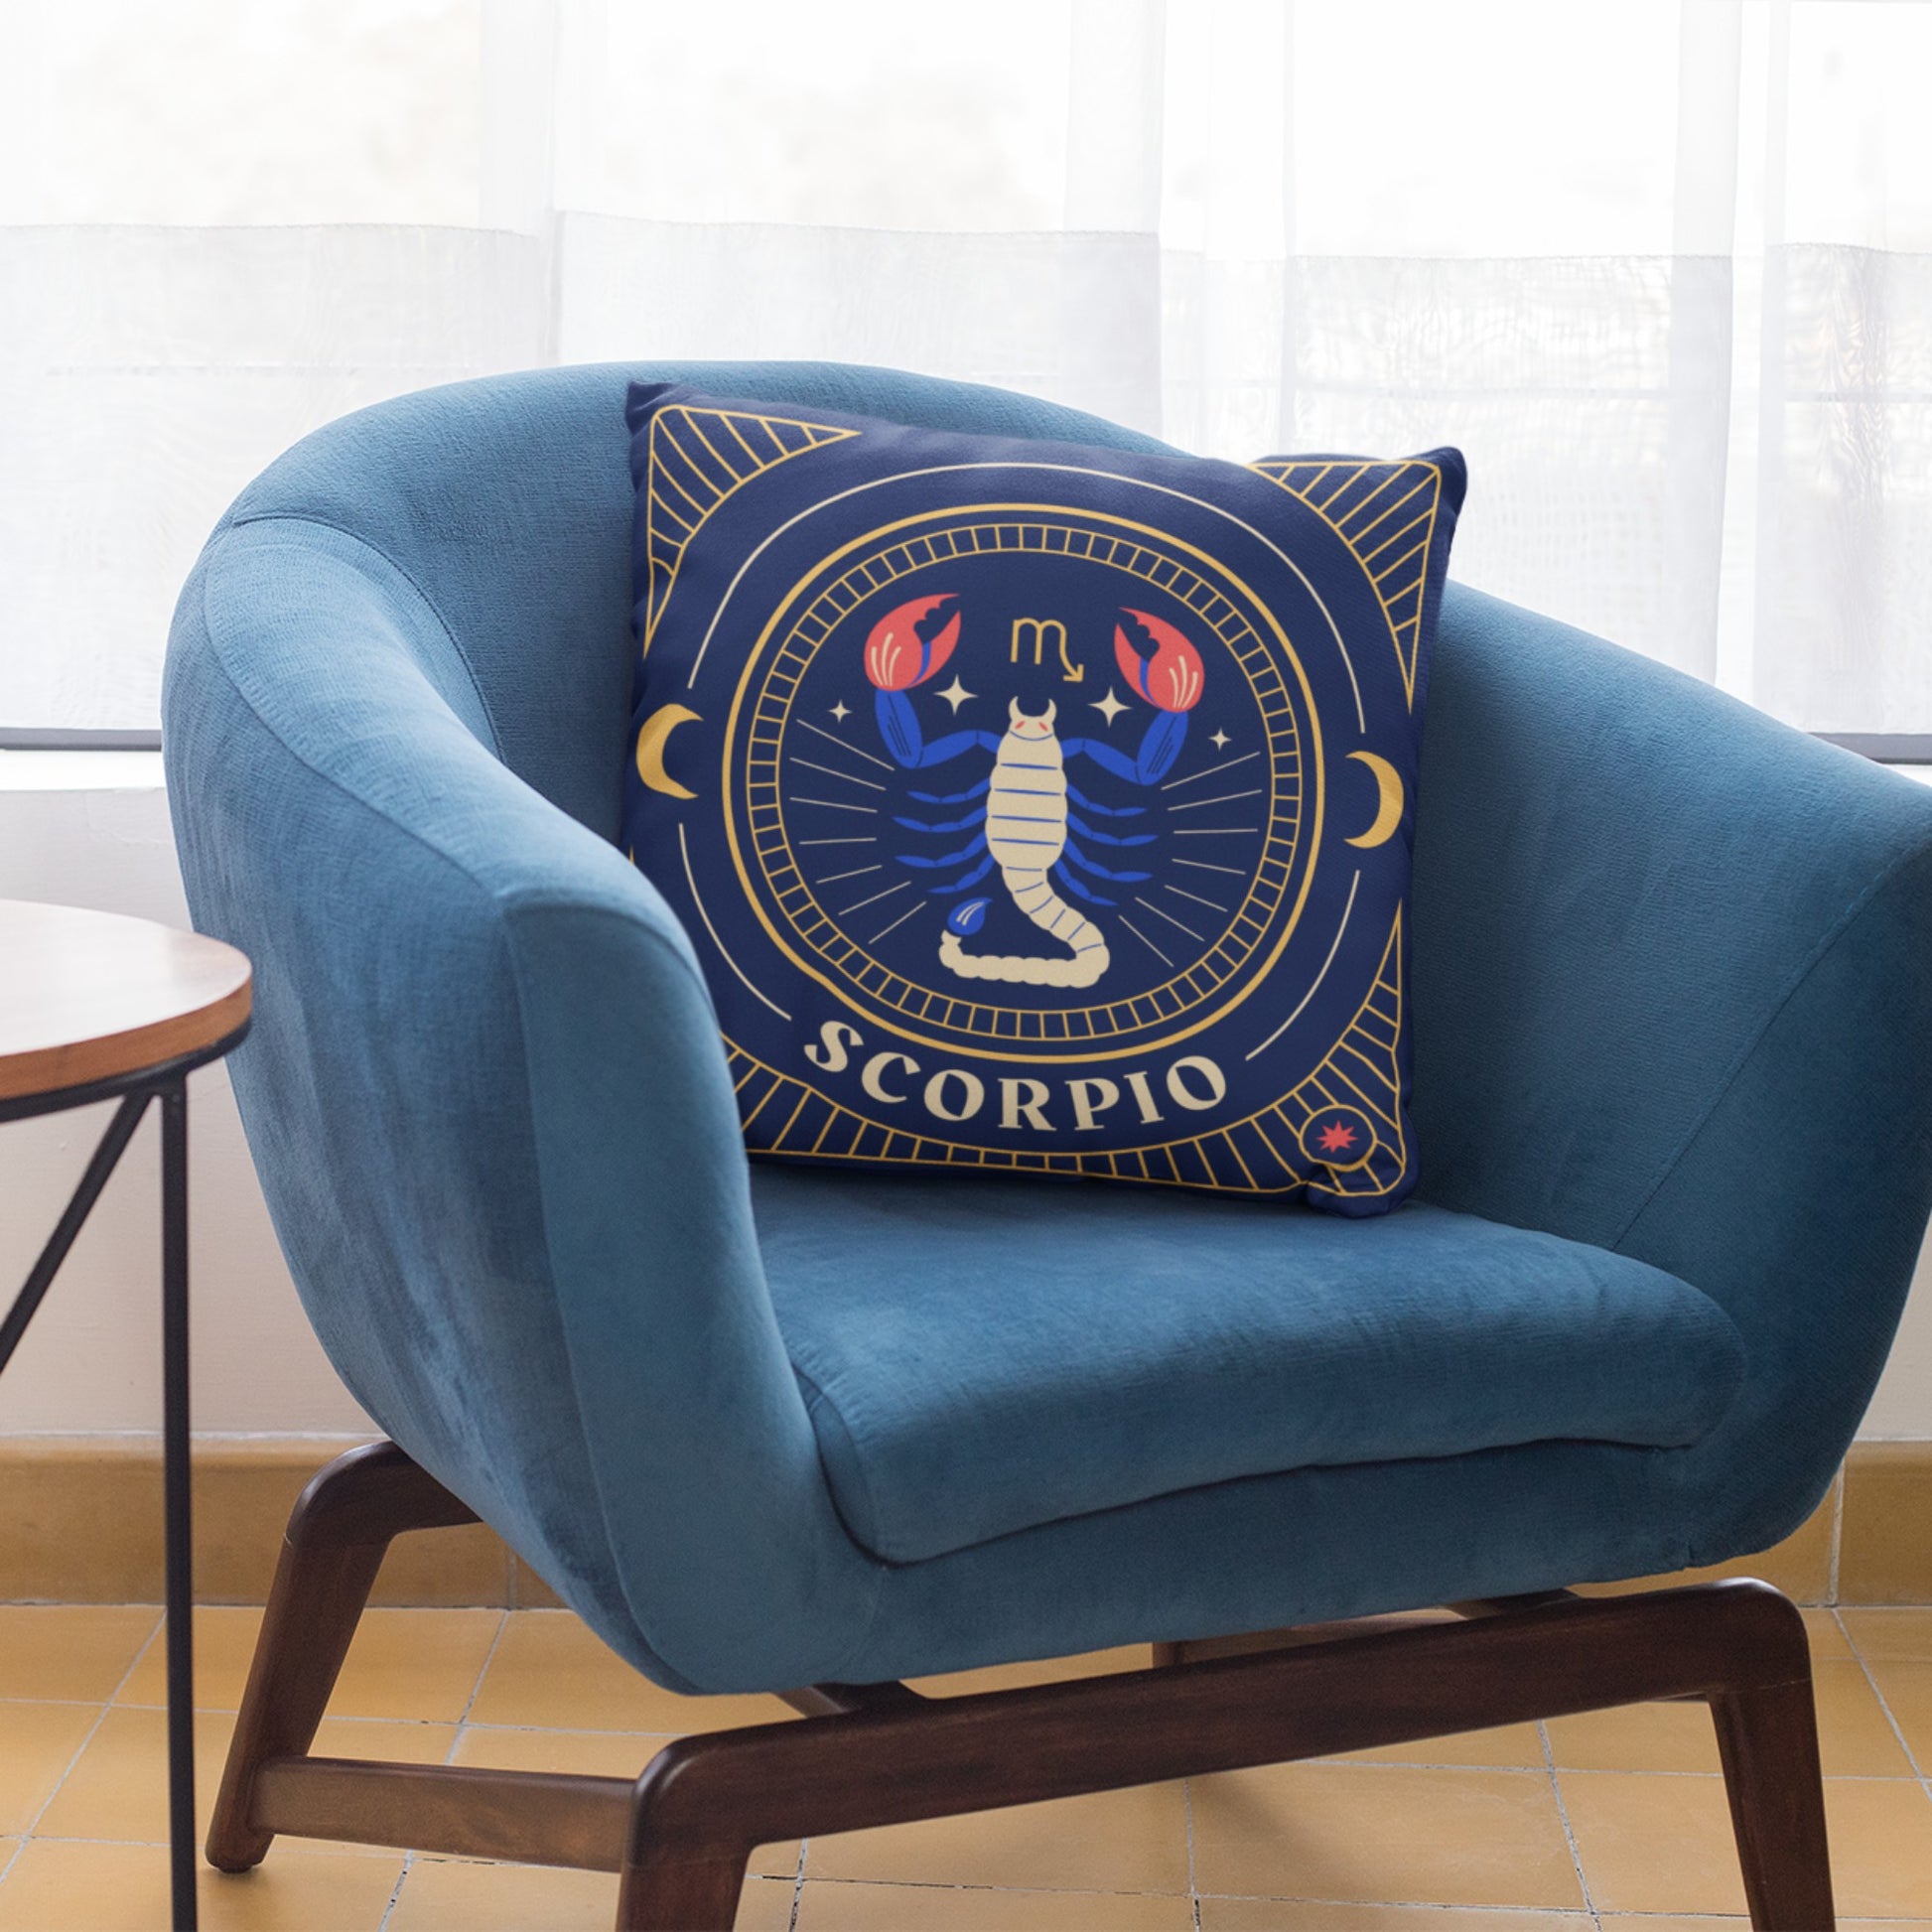 Zodiac-inspired Scorpio Decorative Pillow Case